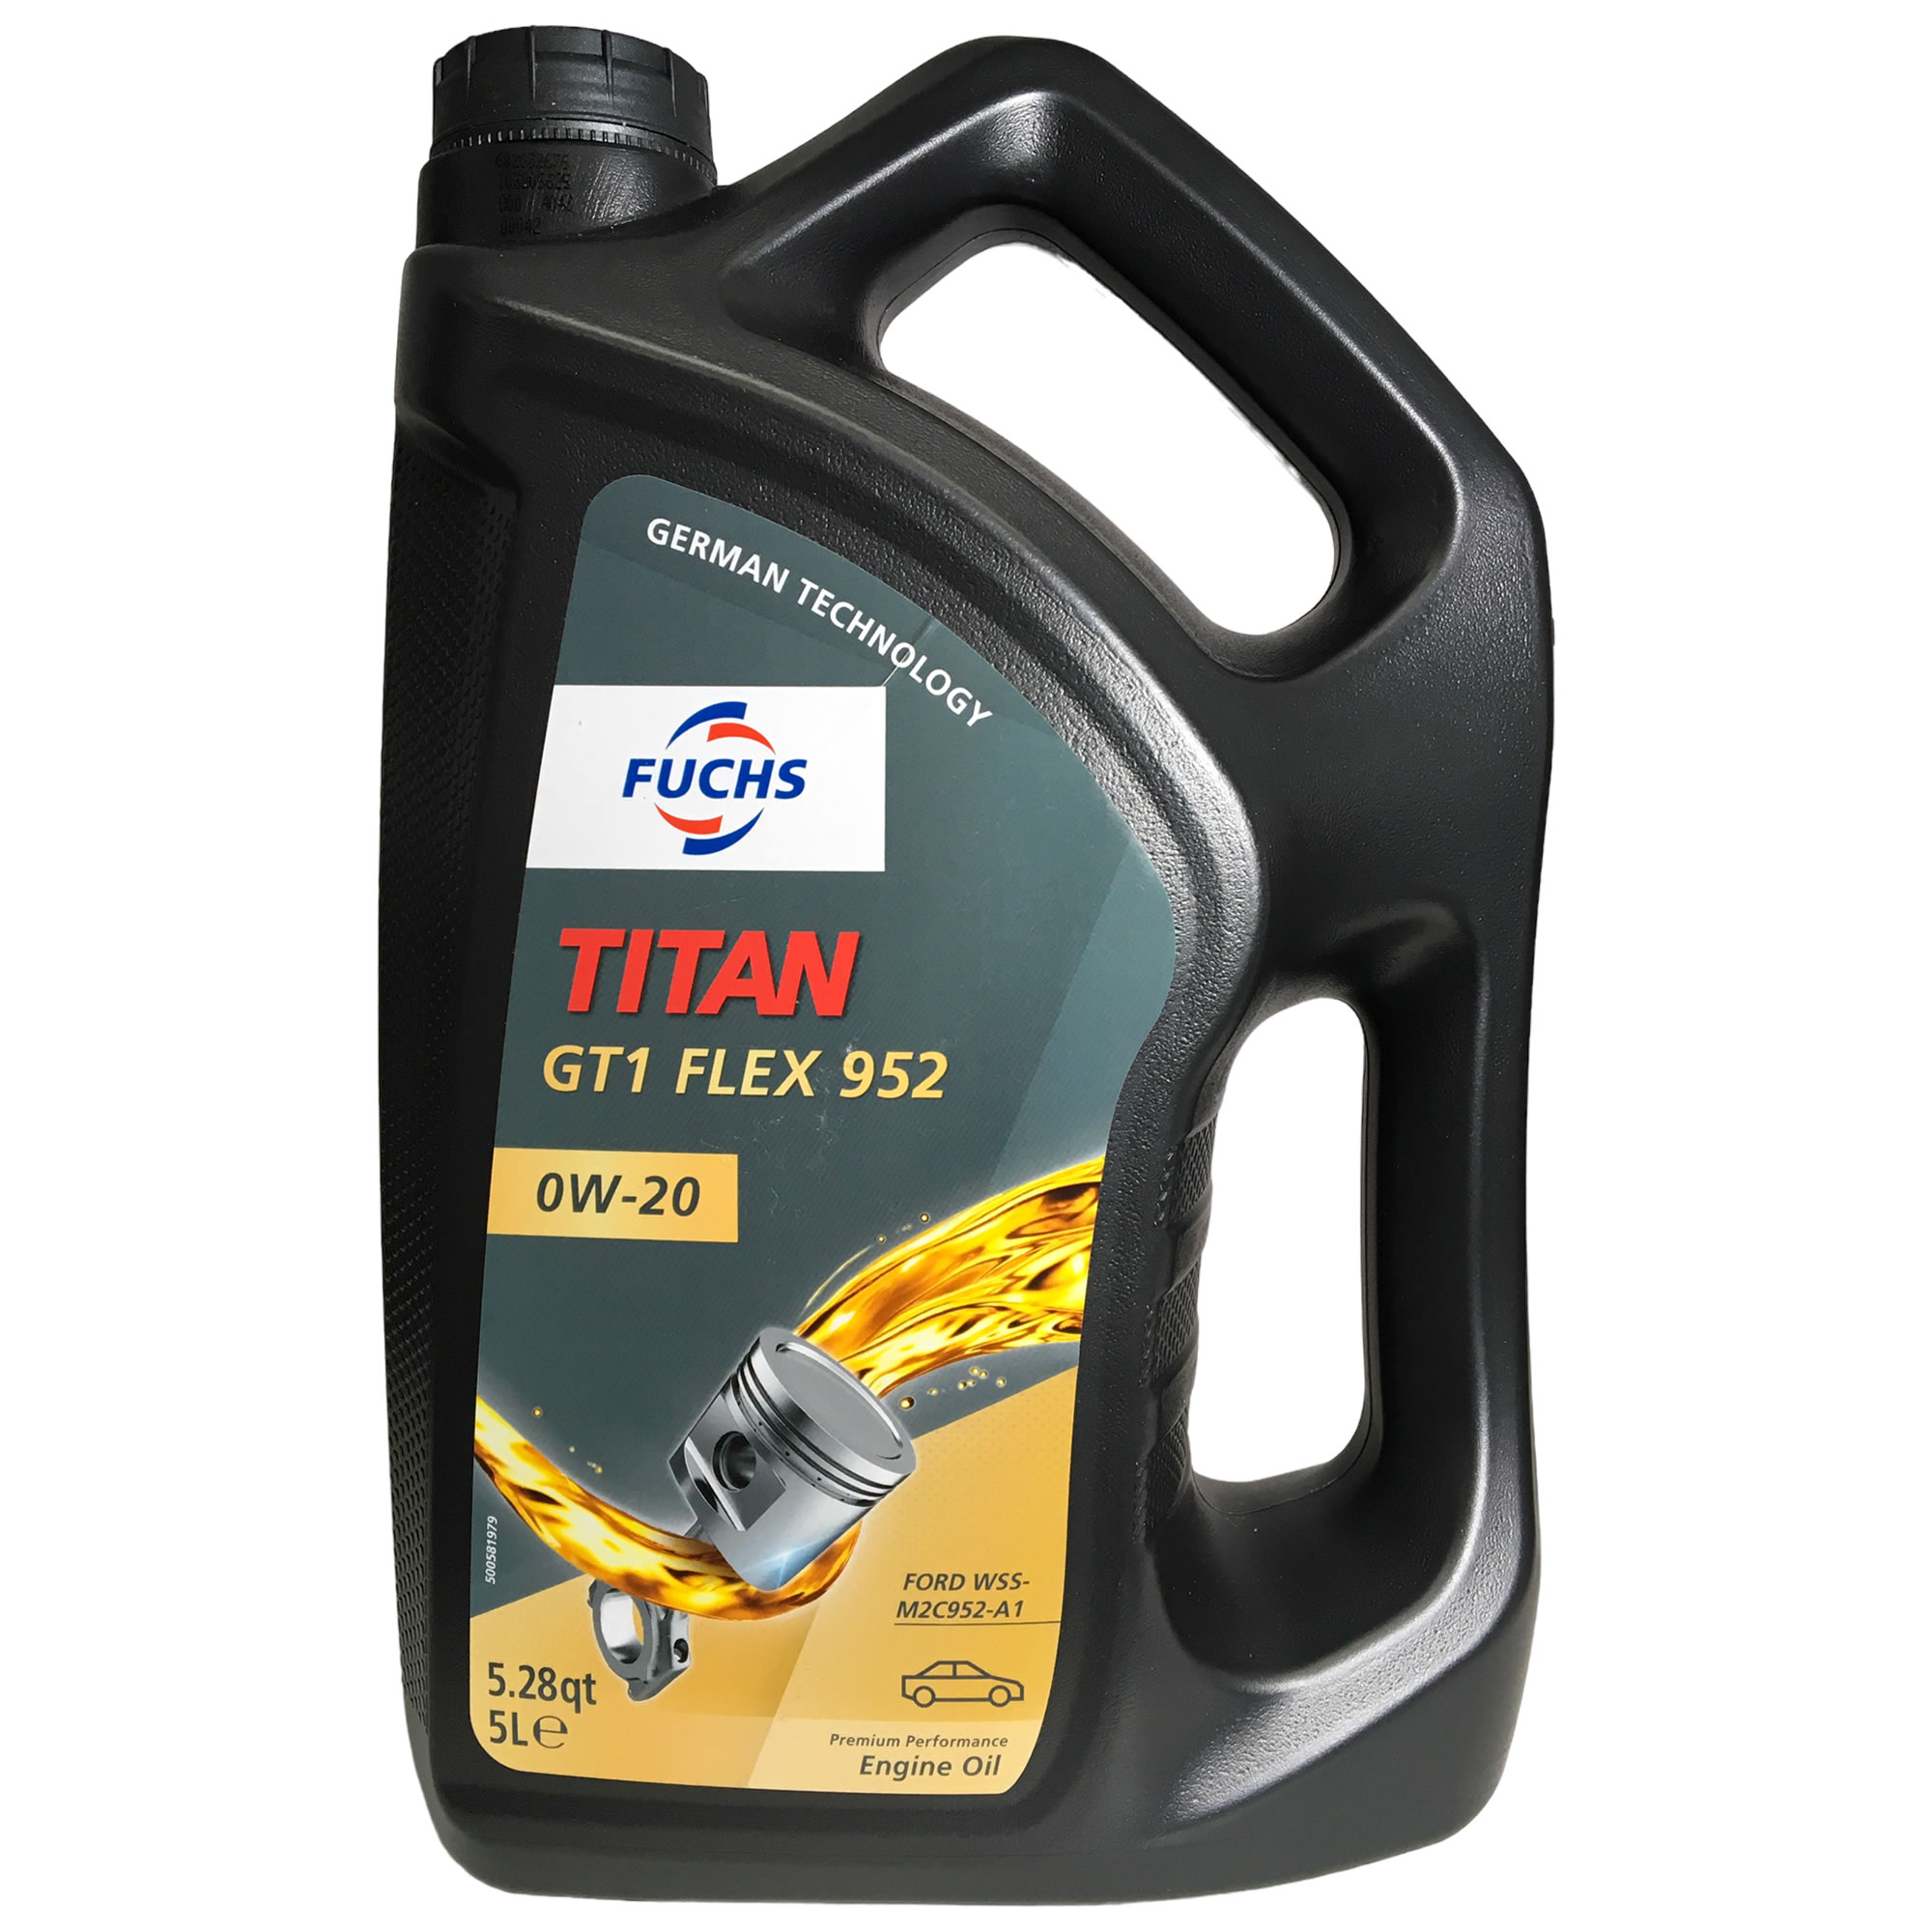 FUCHS-Titan-GT1-Flex-952-0w20-5Litre